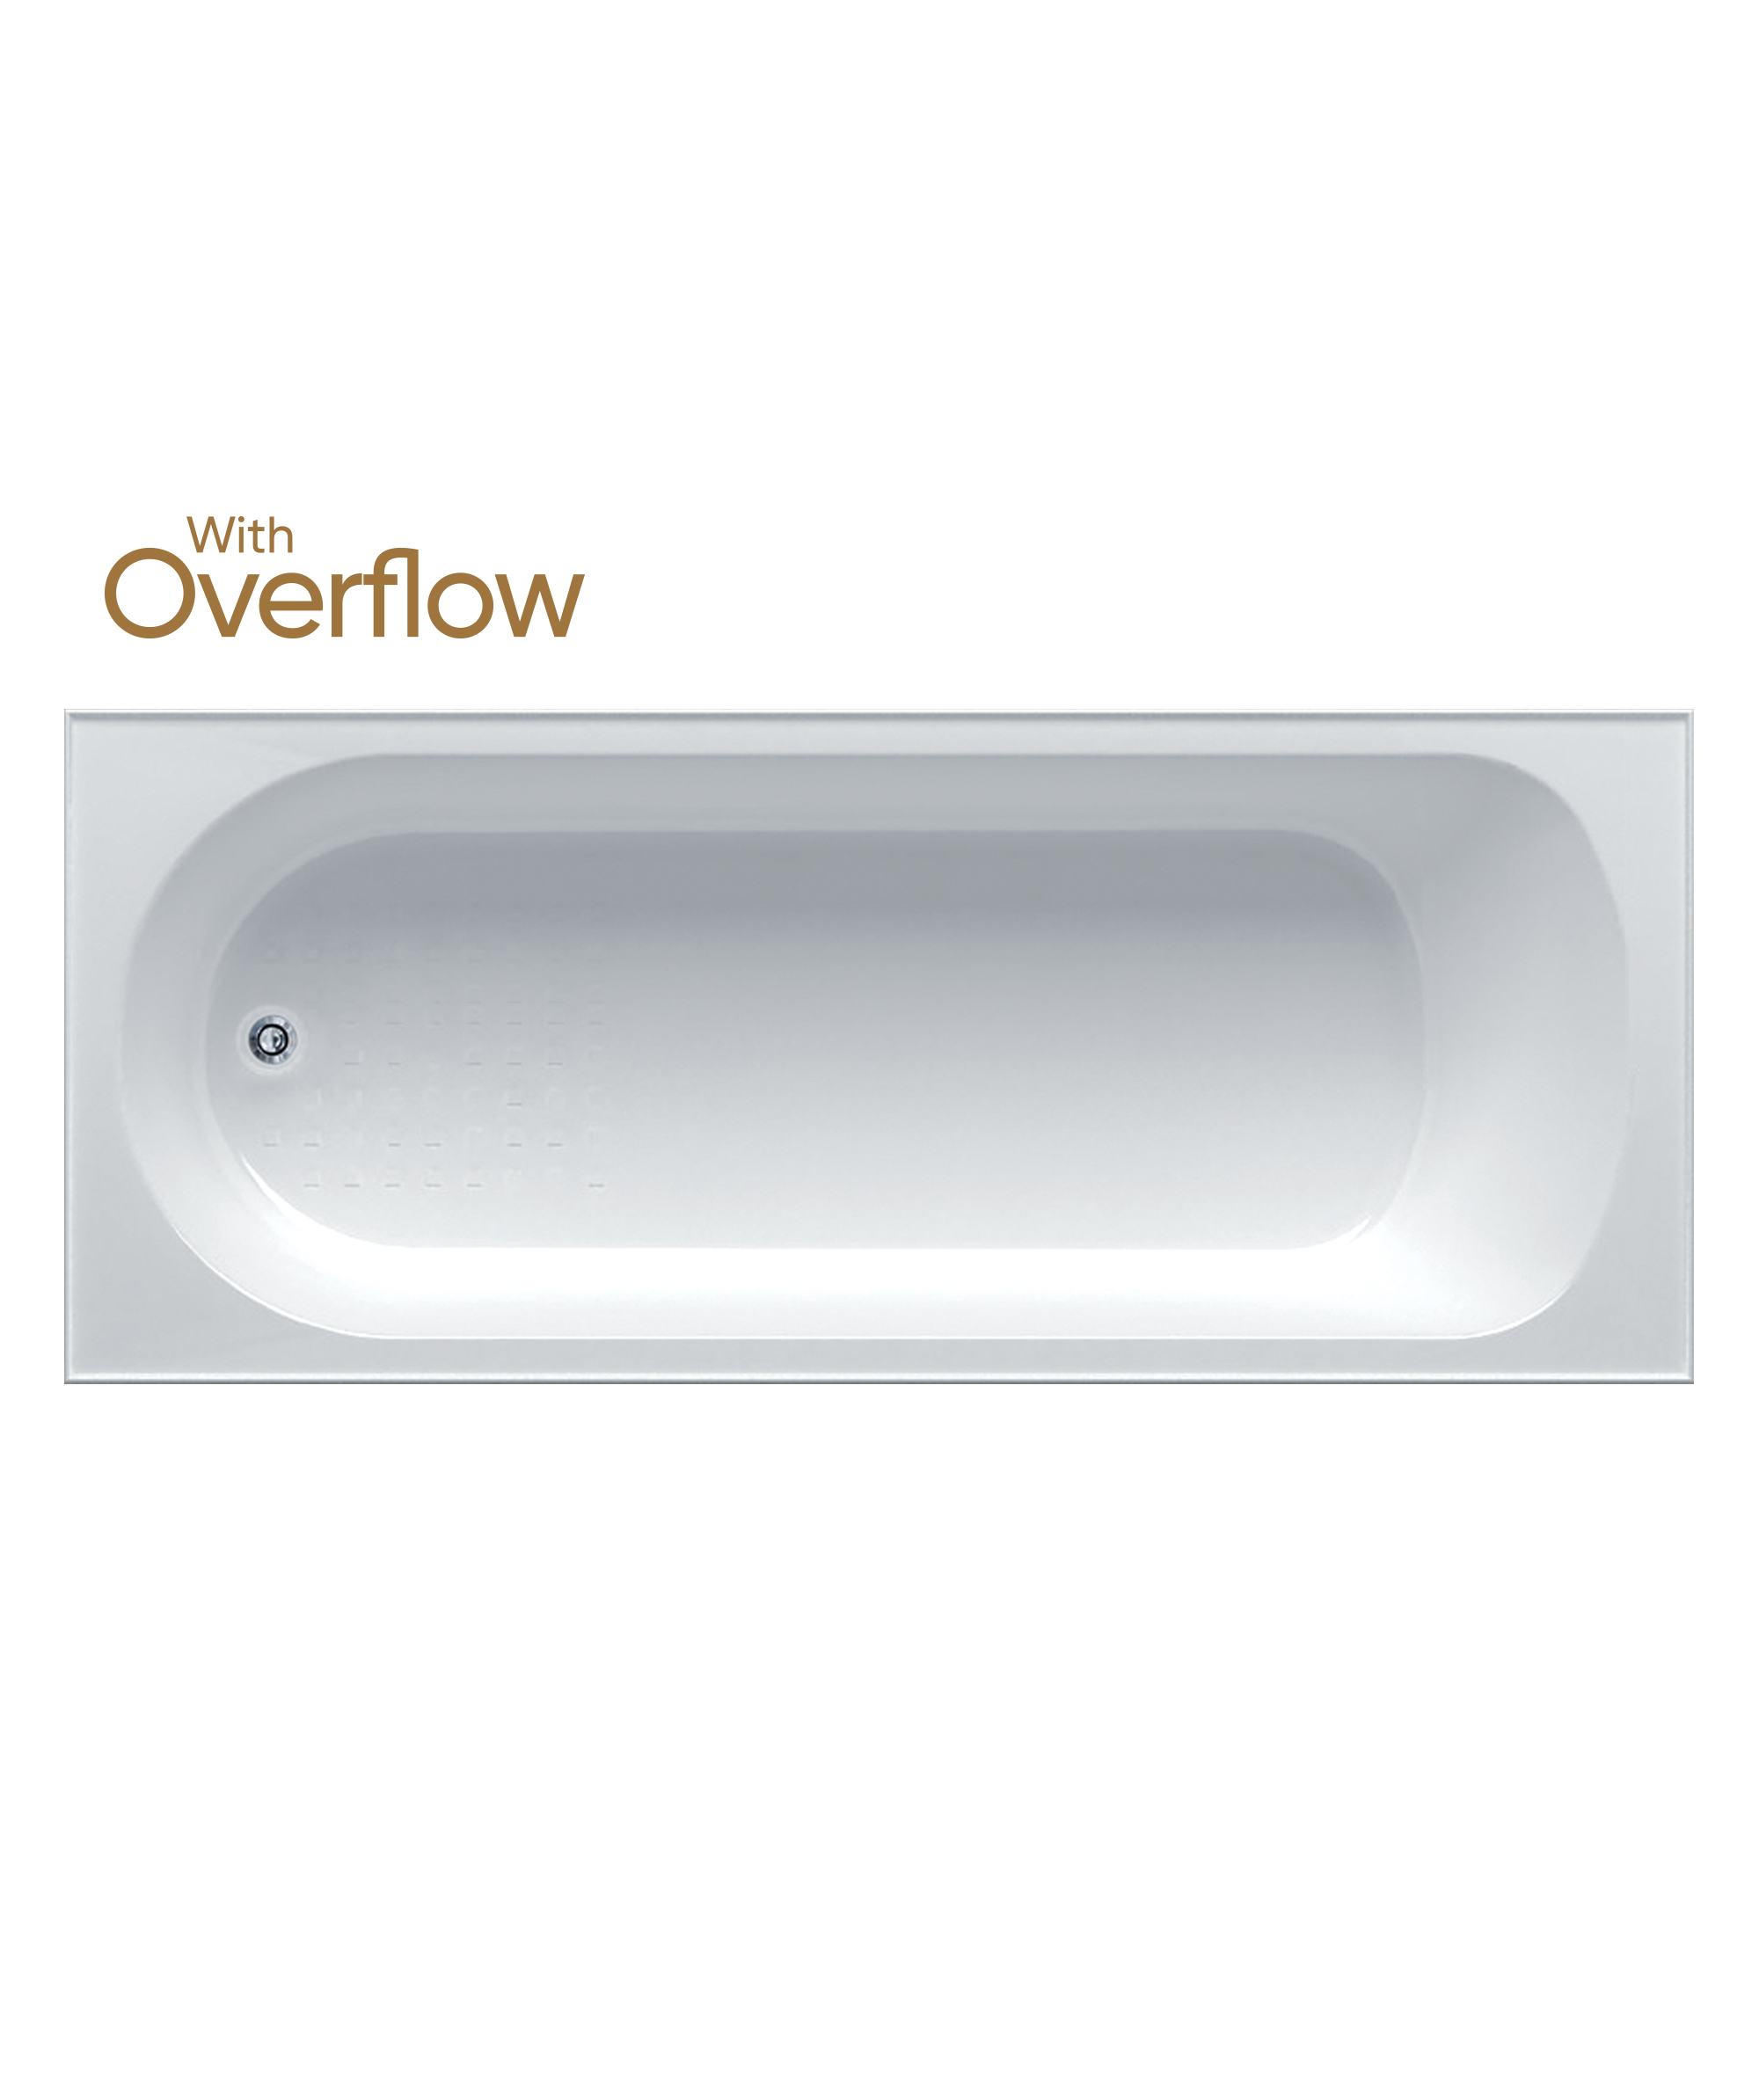 Chios 102 Tondo inset bath - with Overflow Basic and Plug+Waste - 3 sizes